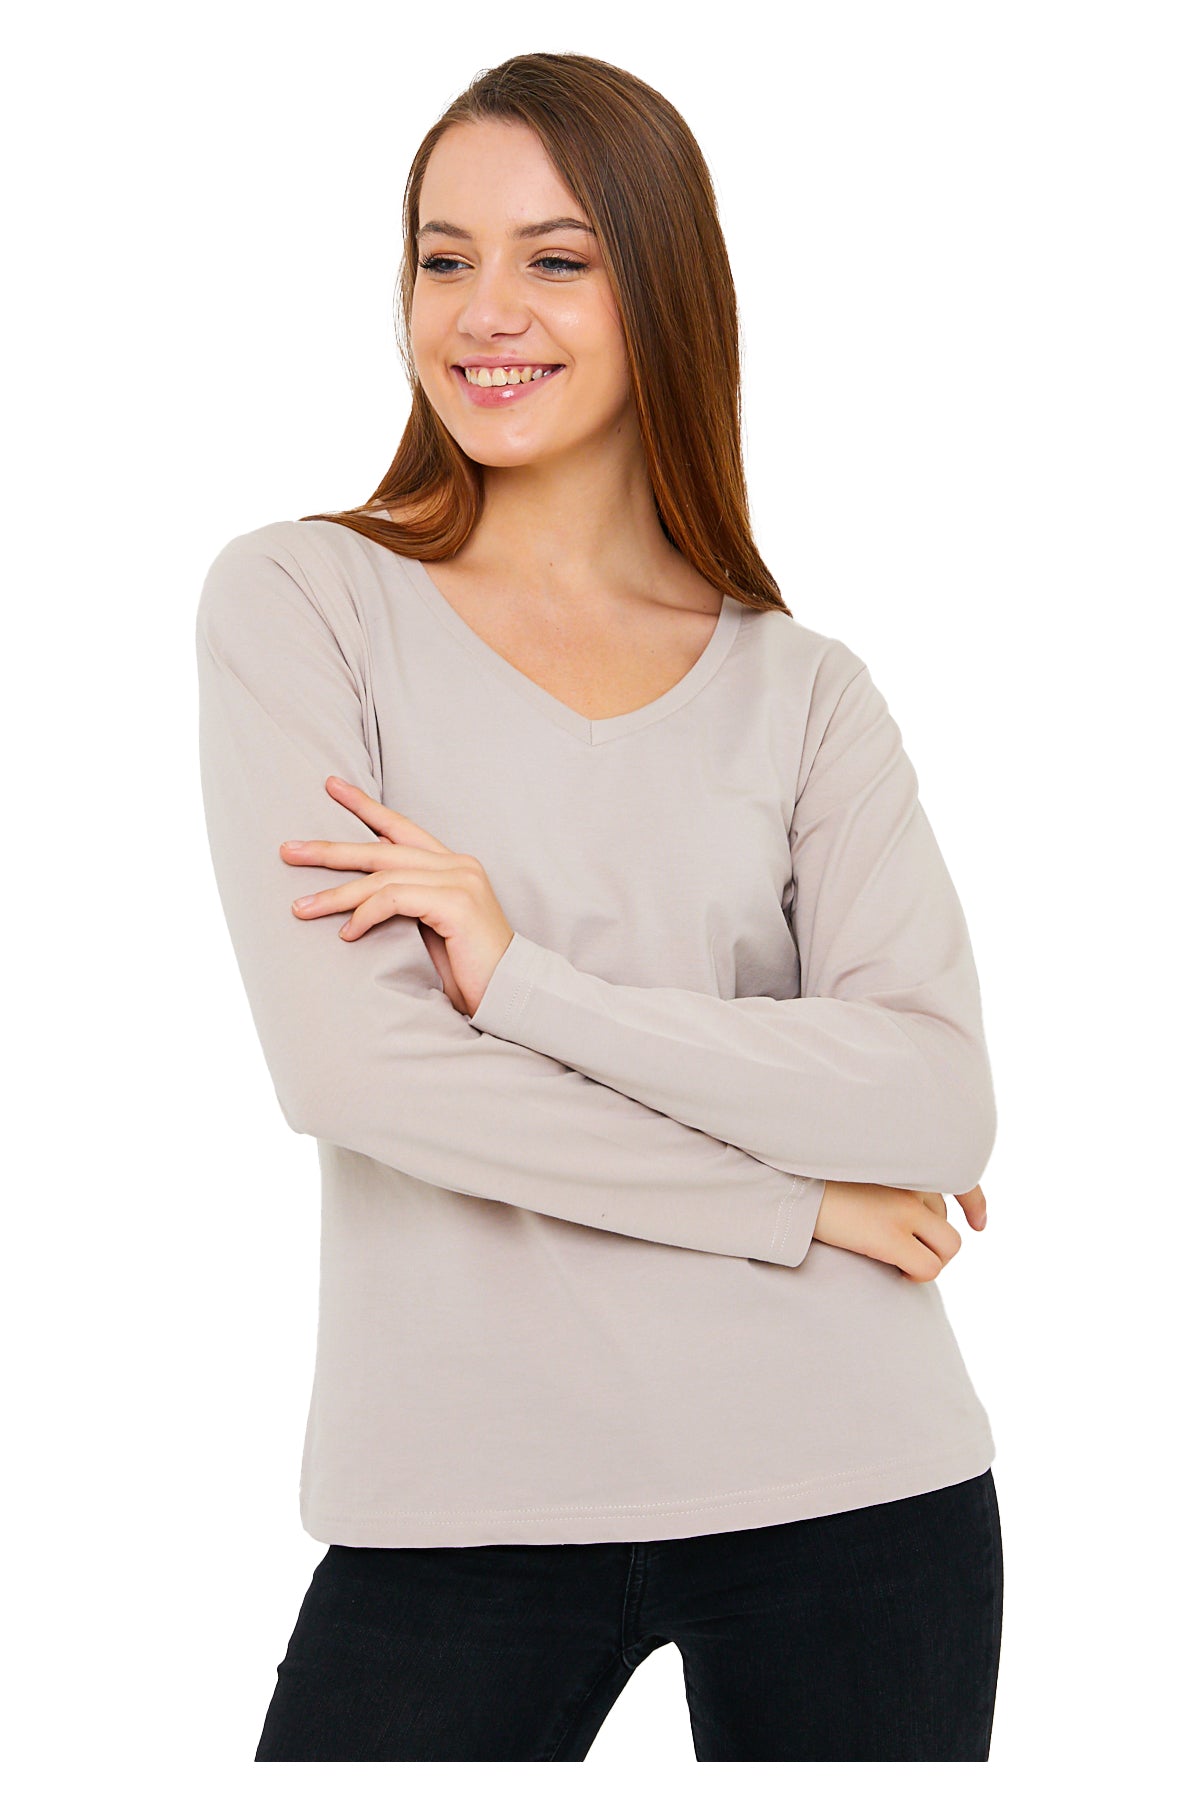 Long Sleeve V-Neck Shirts for Women & Girls - Colorful Pima Cotton-80